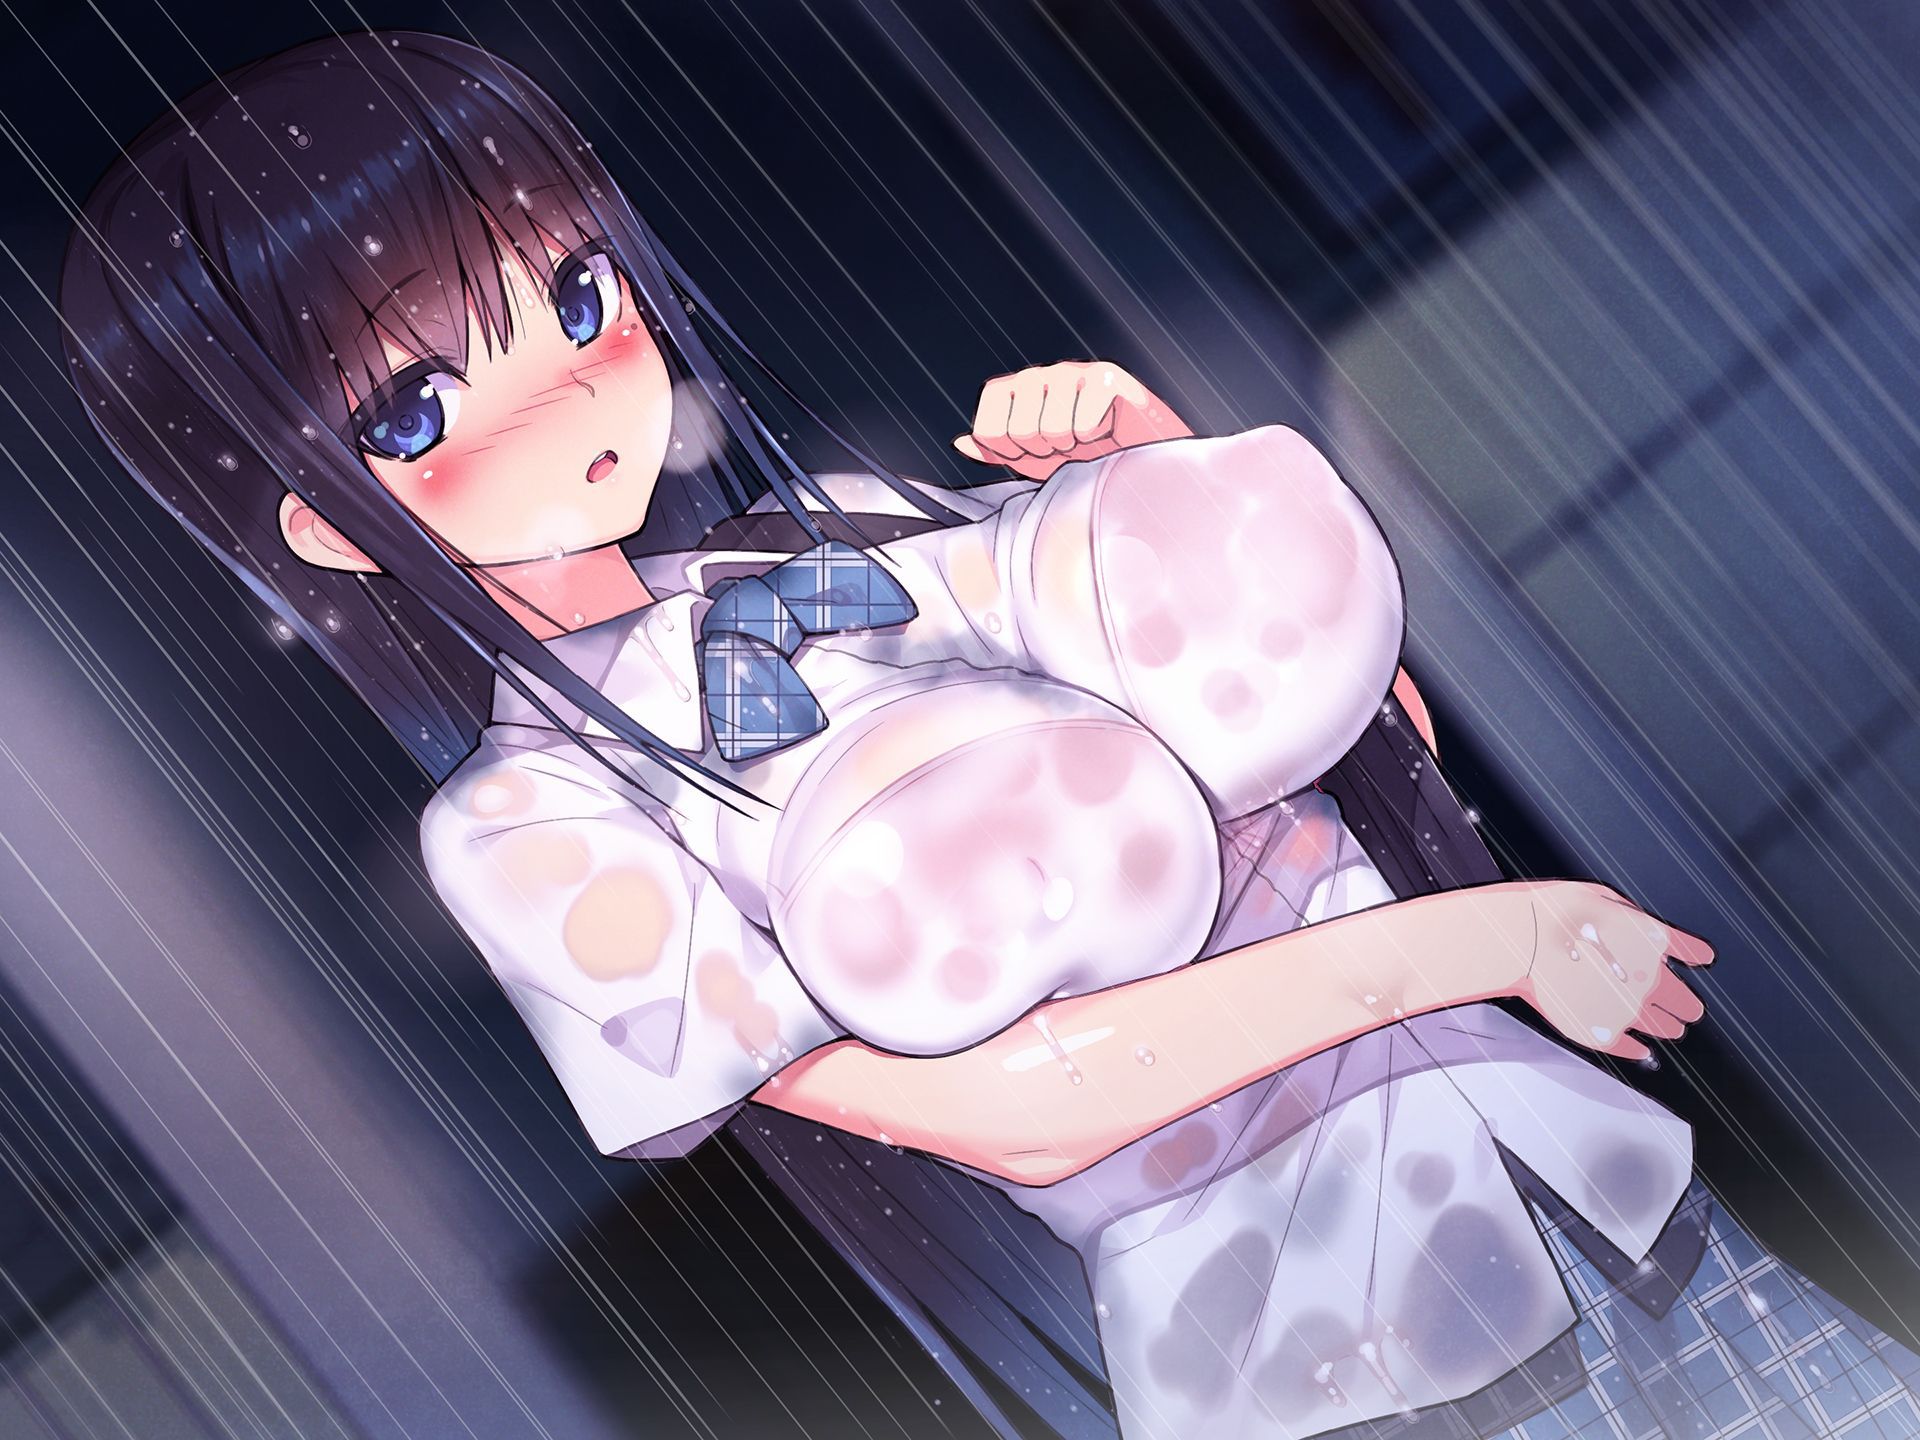 【Secondary】Erotic image of "sheer bra schoolgirl" who has wet uniform in sudden rain and bra is transparent 19